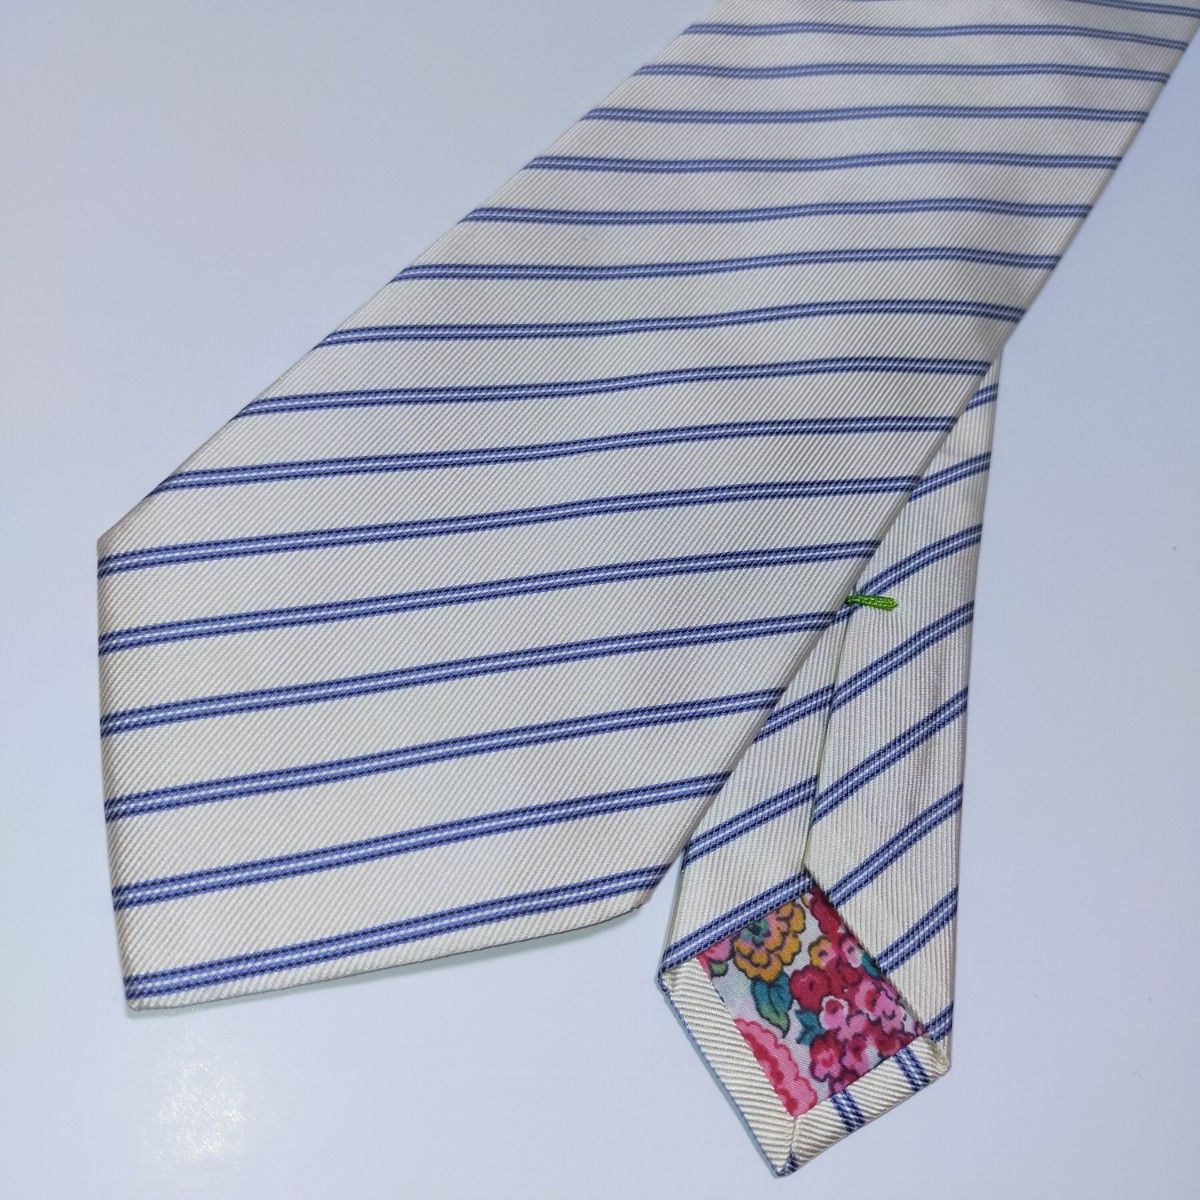 Paul Smith新品未使用ネクタイ超破格値！人気ブランド高品質ネクタイが超お買い得価格！お値下げ中！！！